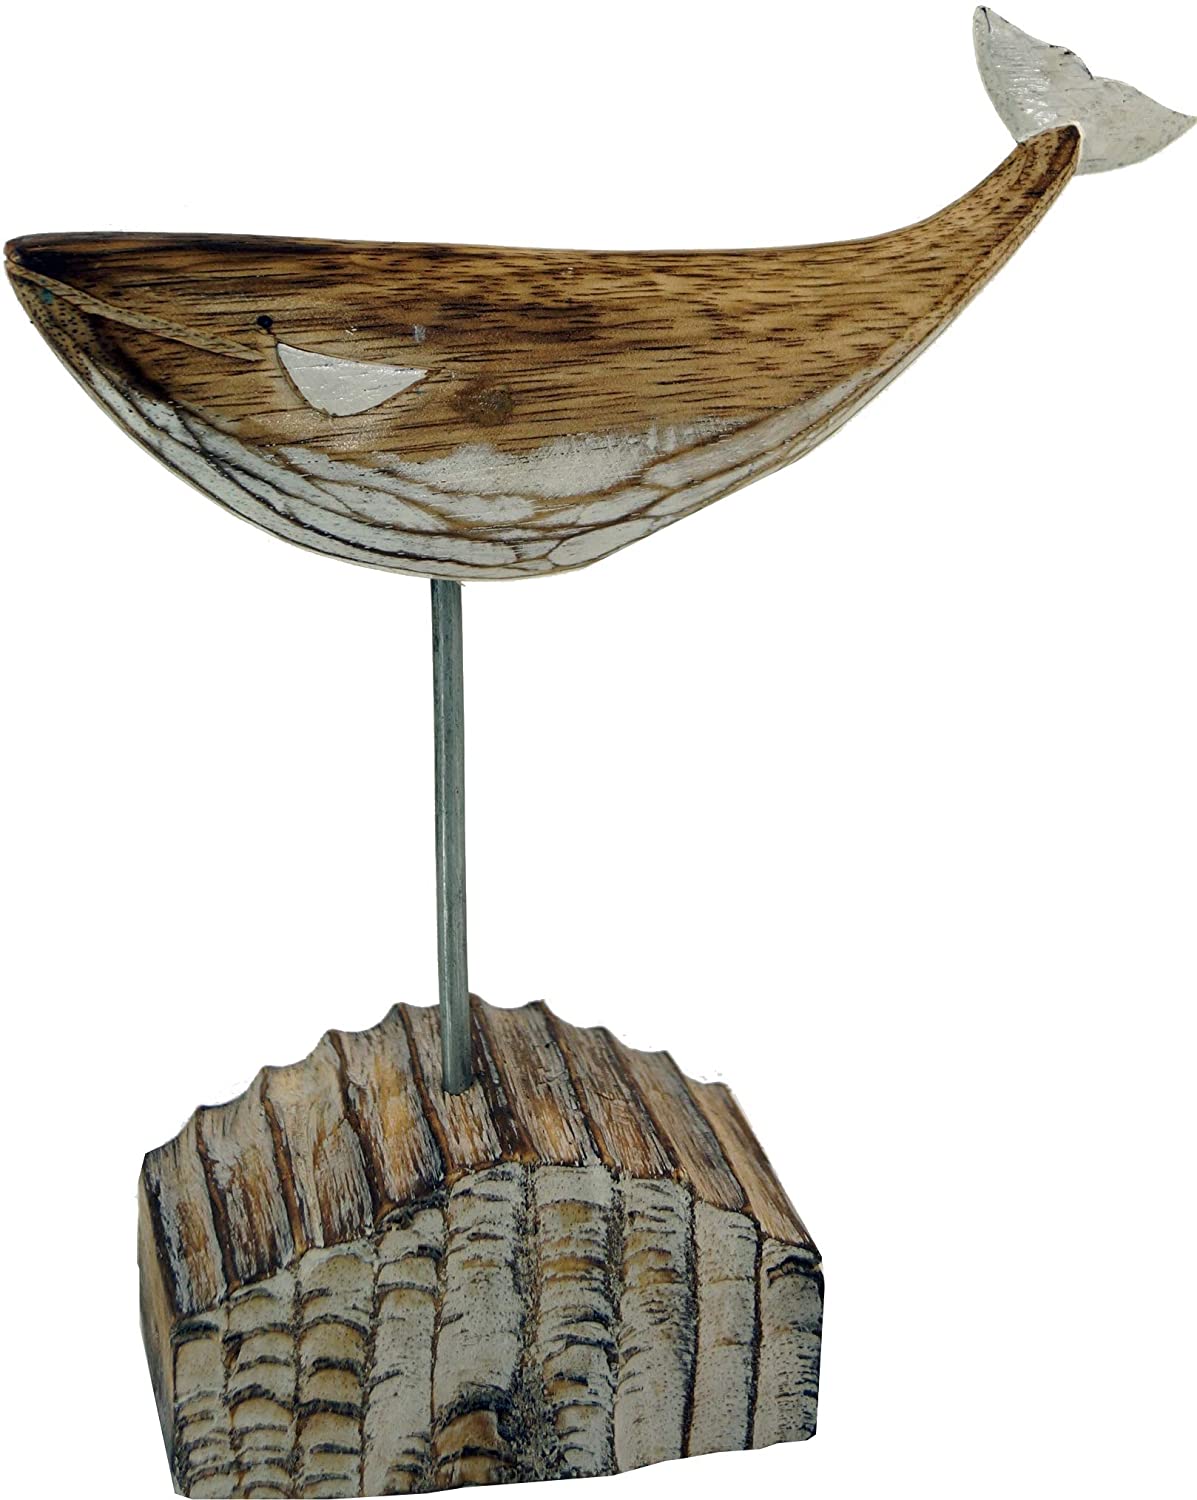 Guru-Shop GURU SHOP Carved Wooden Whale, Moby Dick 1, on Wooden Metal Stand, Model 1, Brown, 24 x 20 x 7 cm, Animal Figures